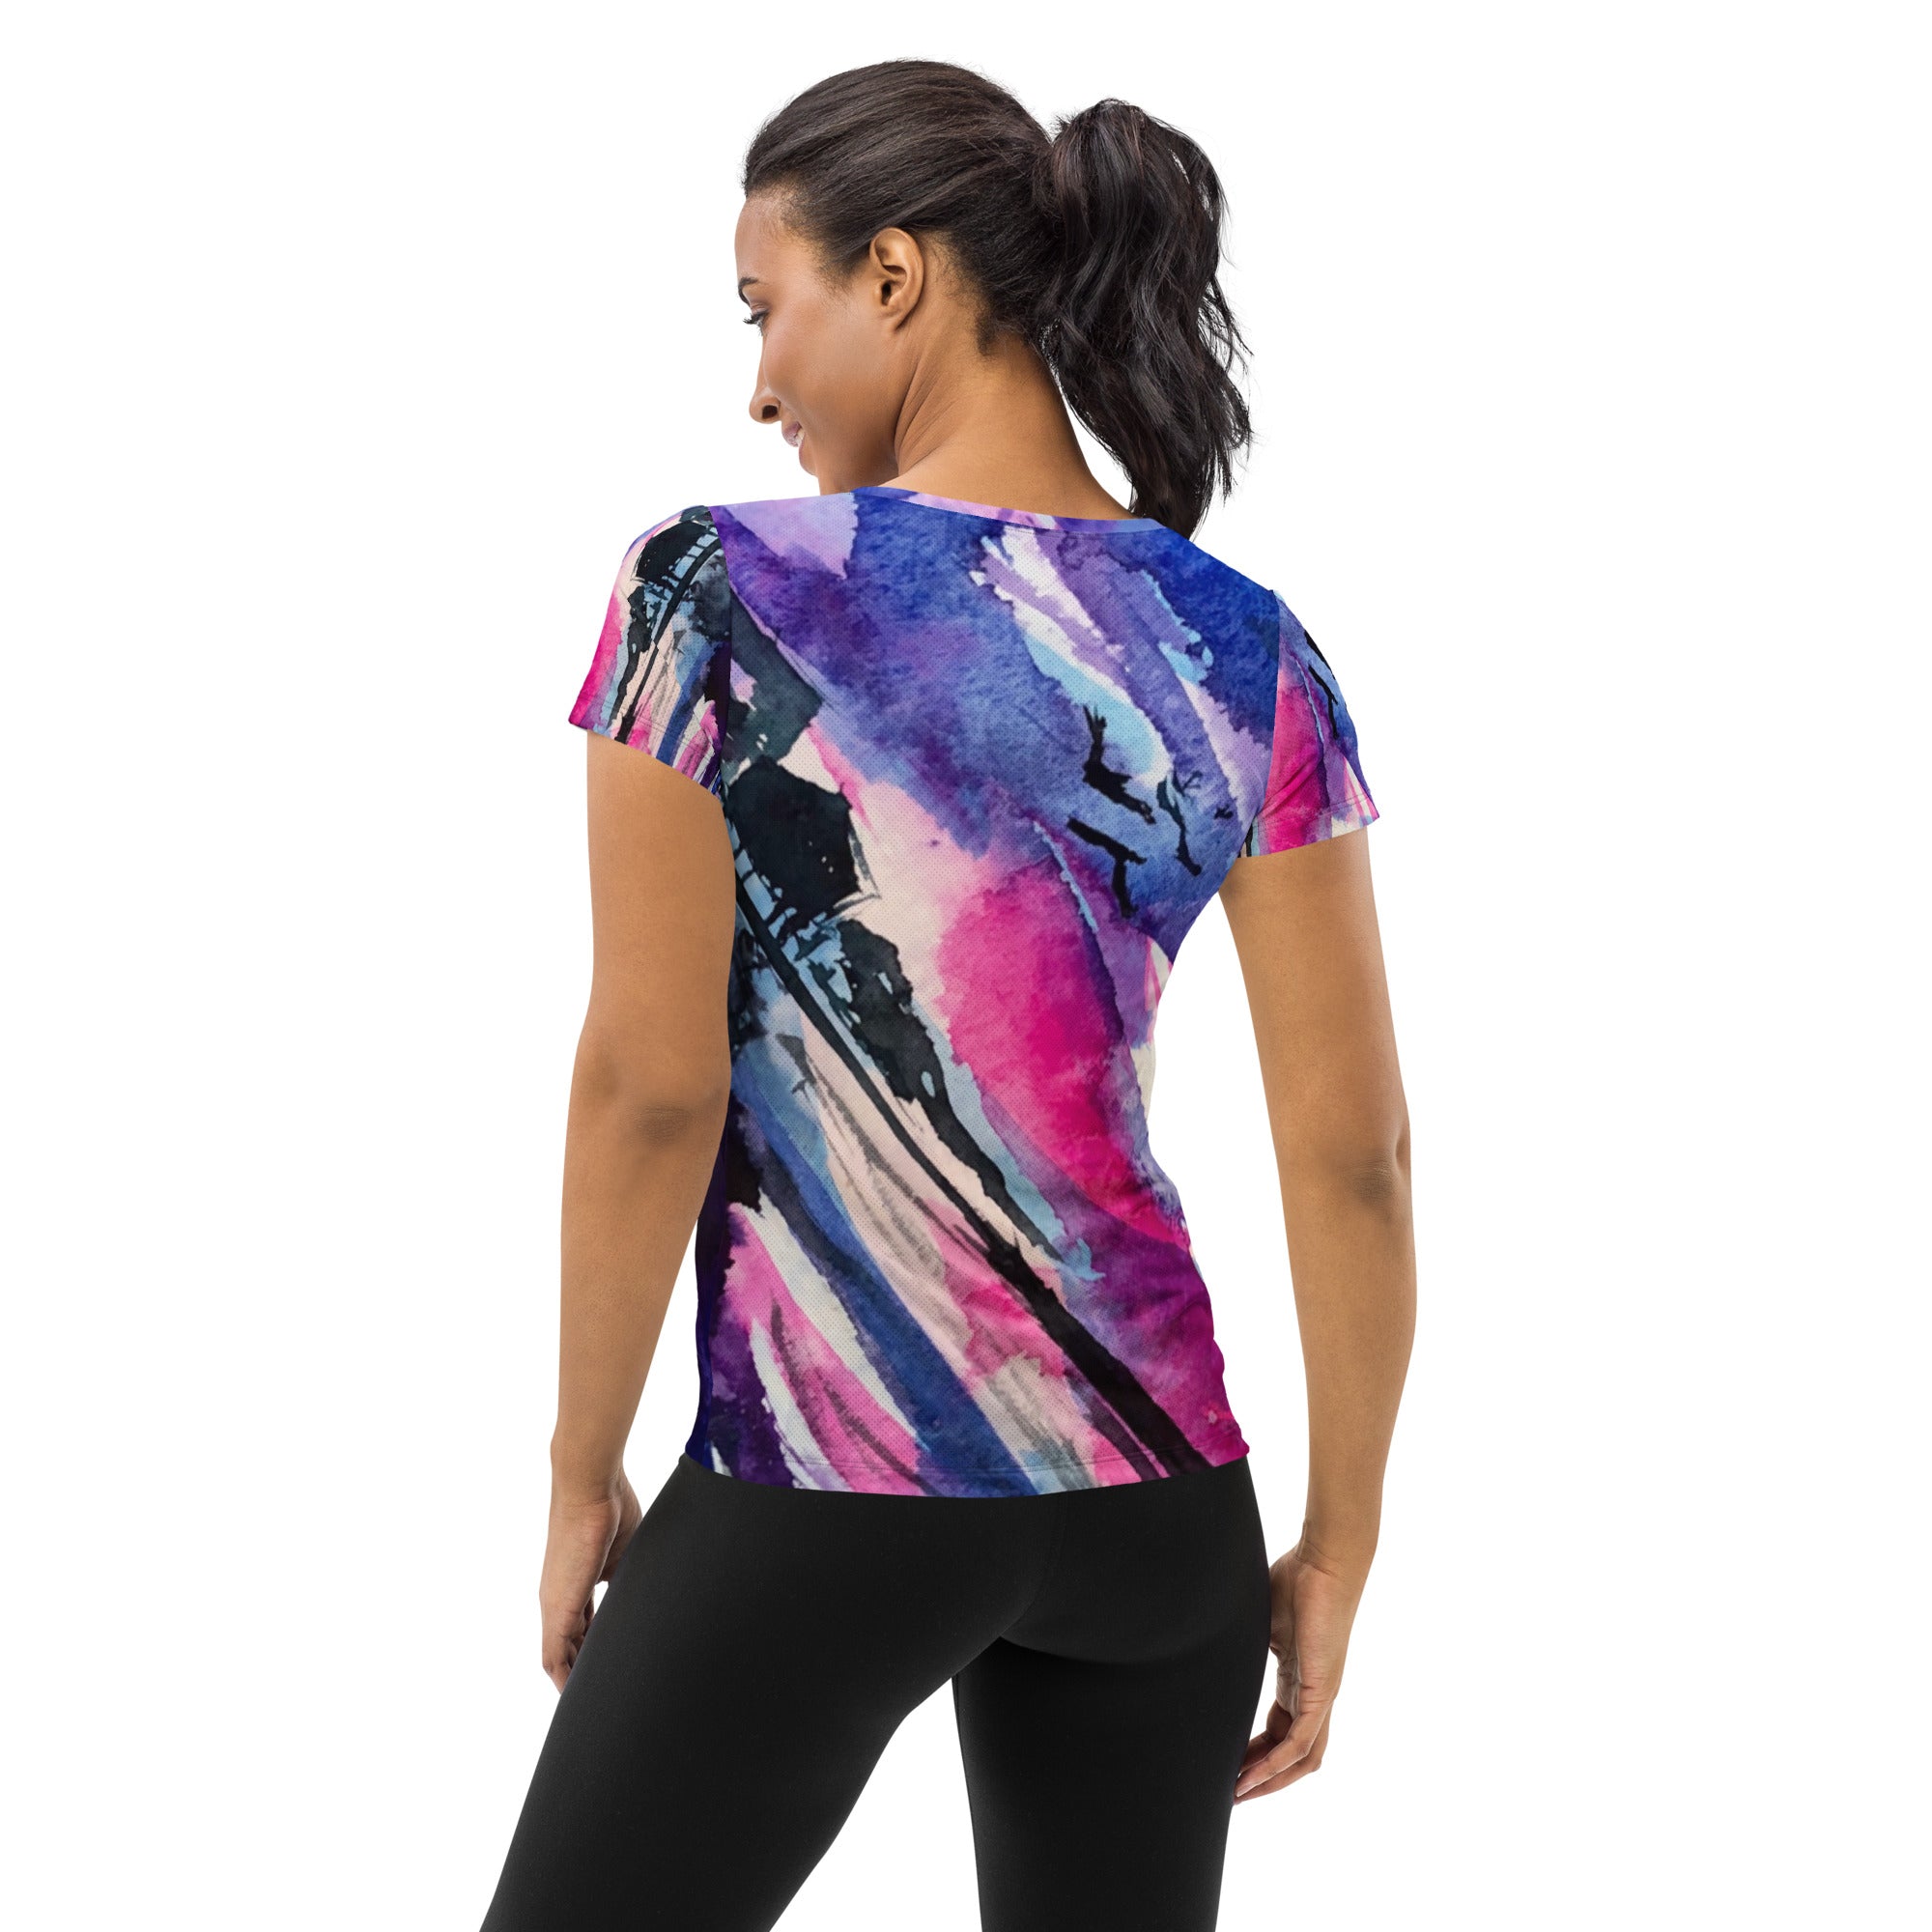 Women's Athletic T-shirt - Newport Sunset